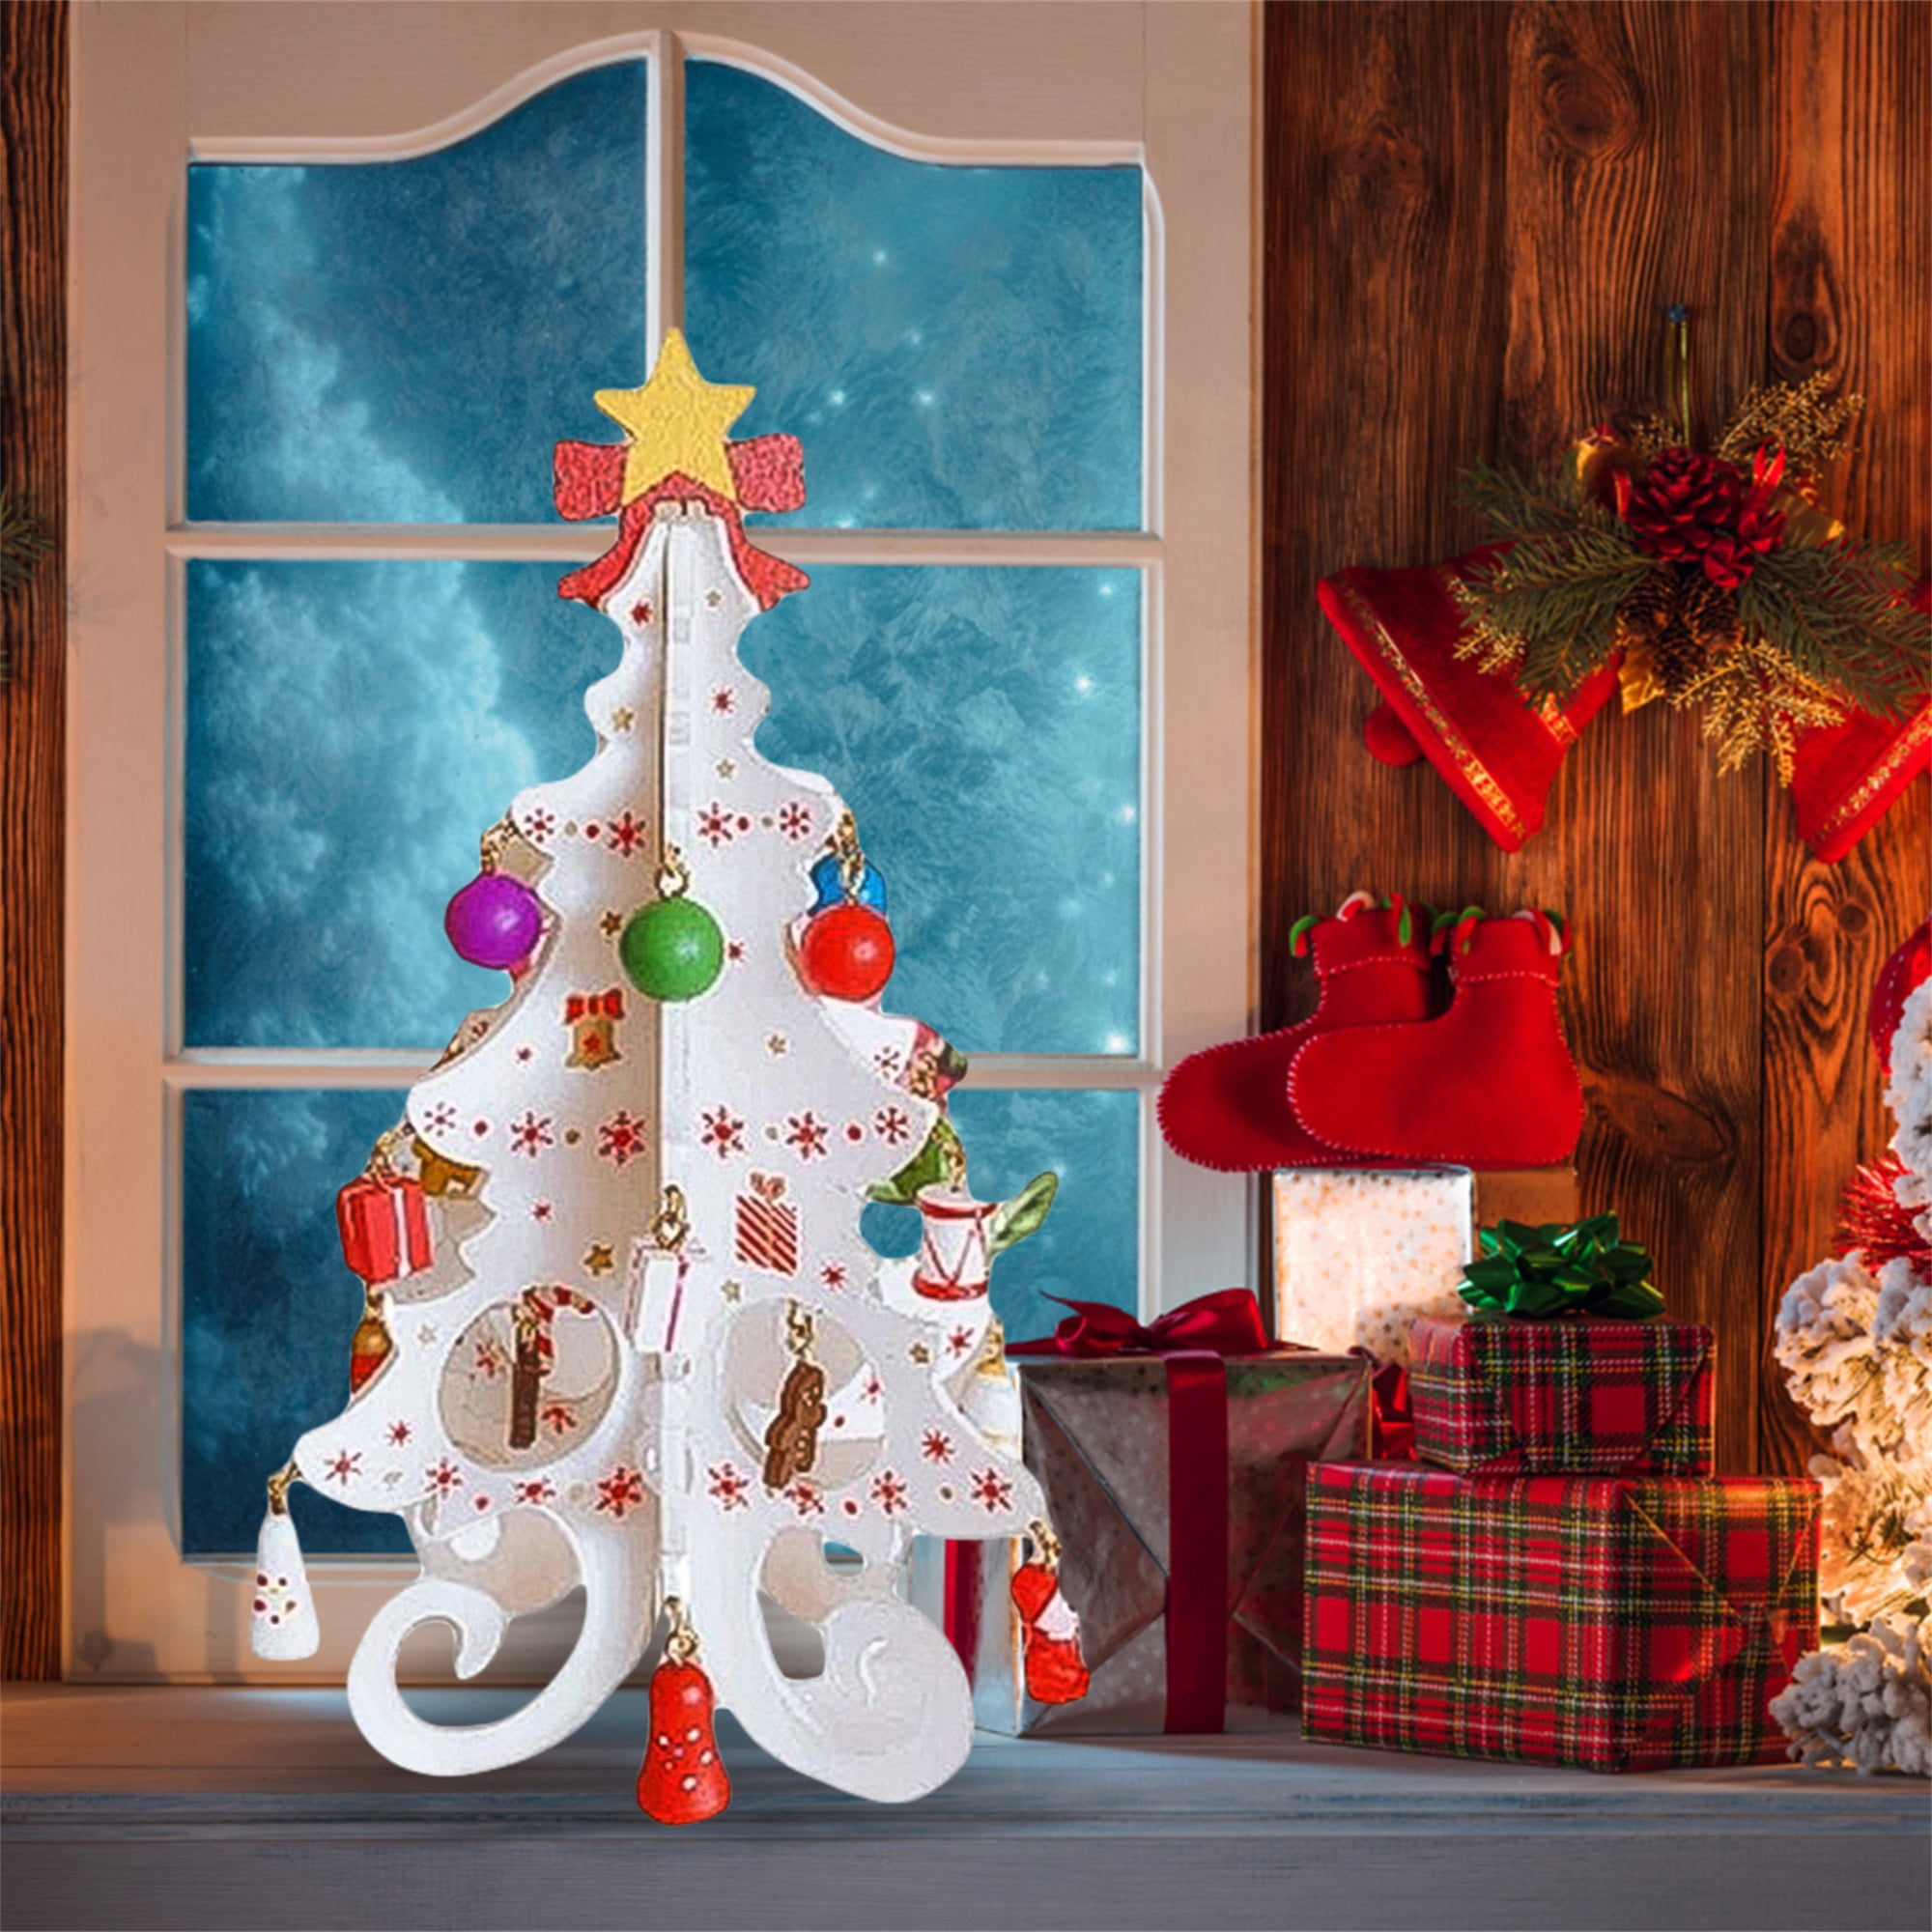 Sunisery Wood Christmas Tree Decor, Cute Standing Desk Ornament Party Favor  